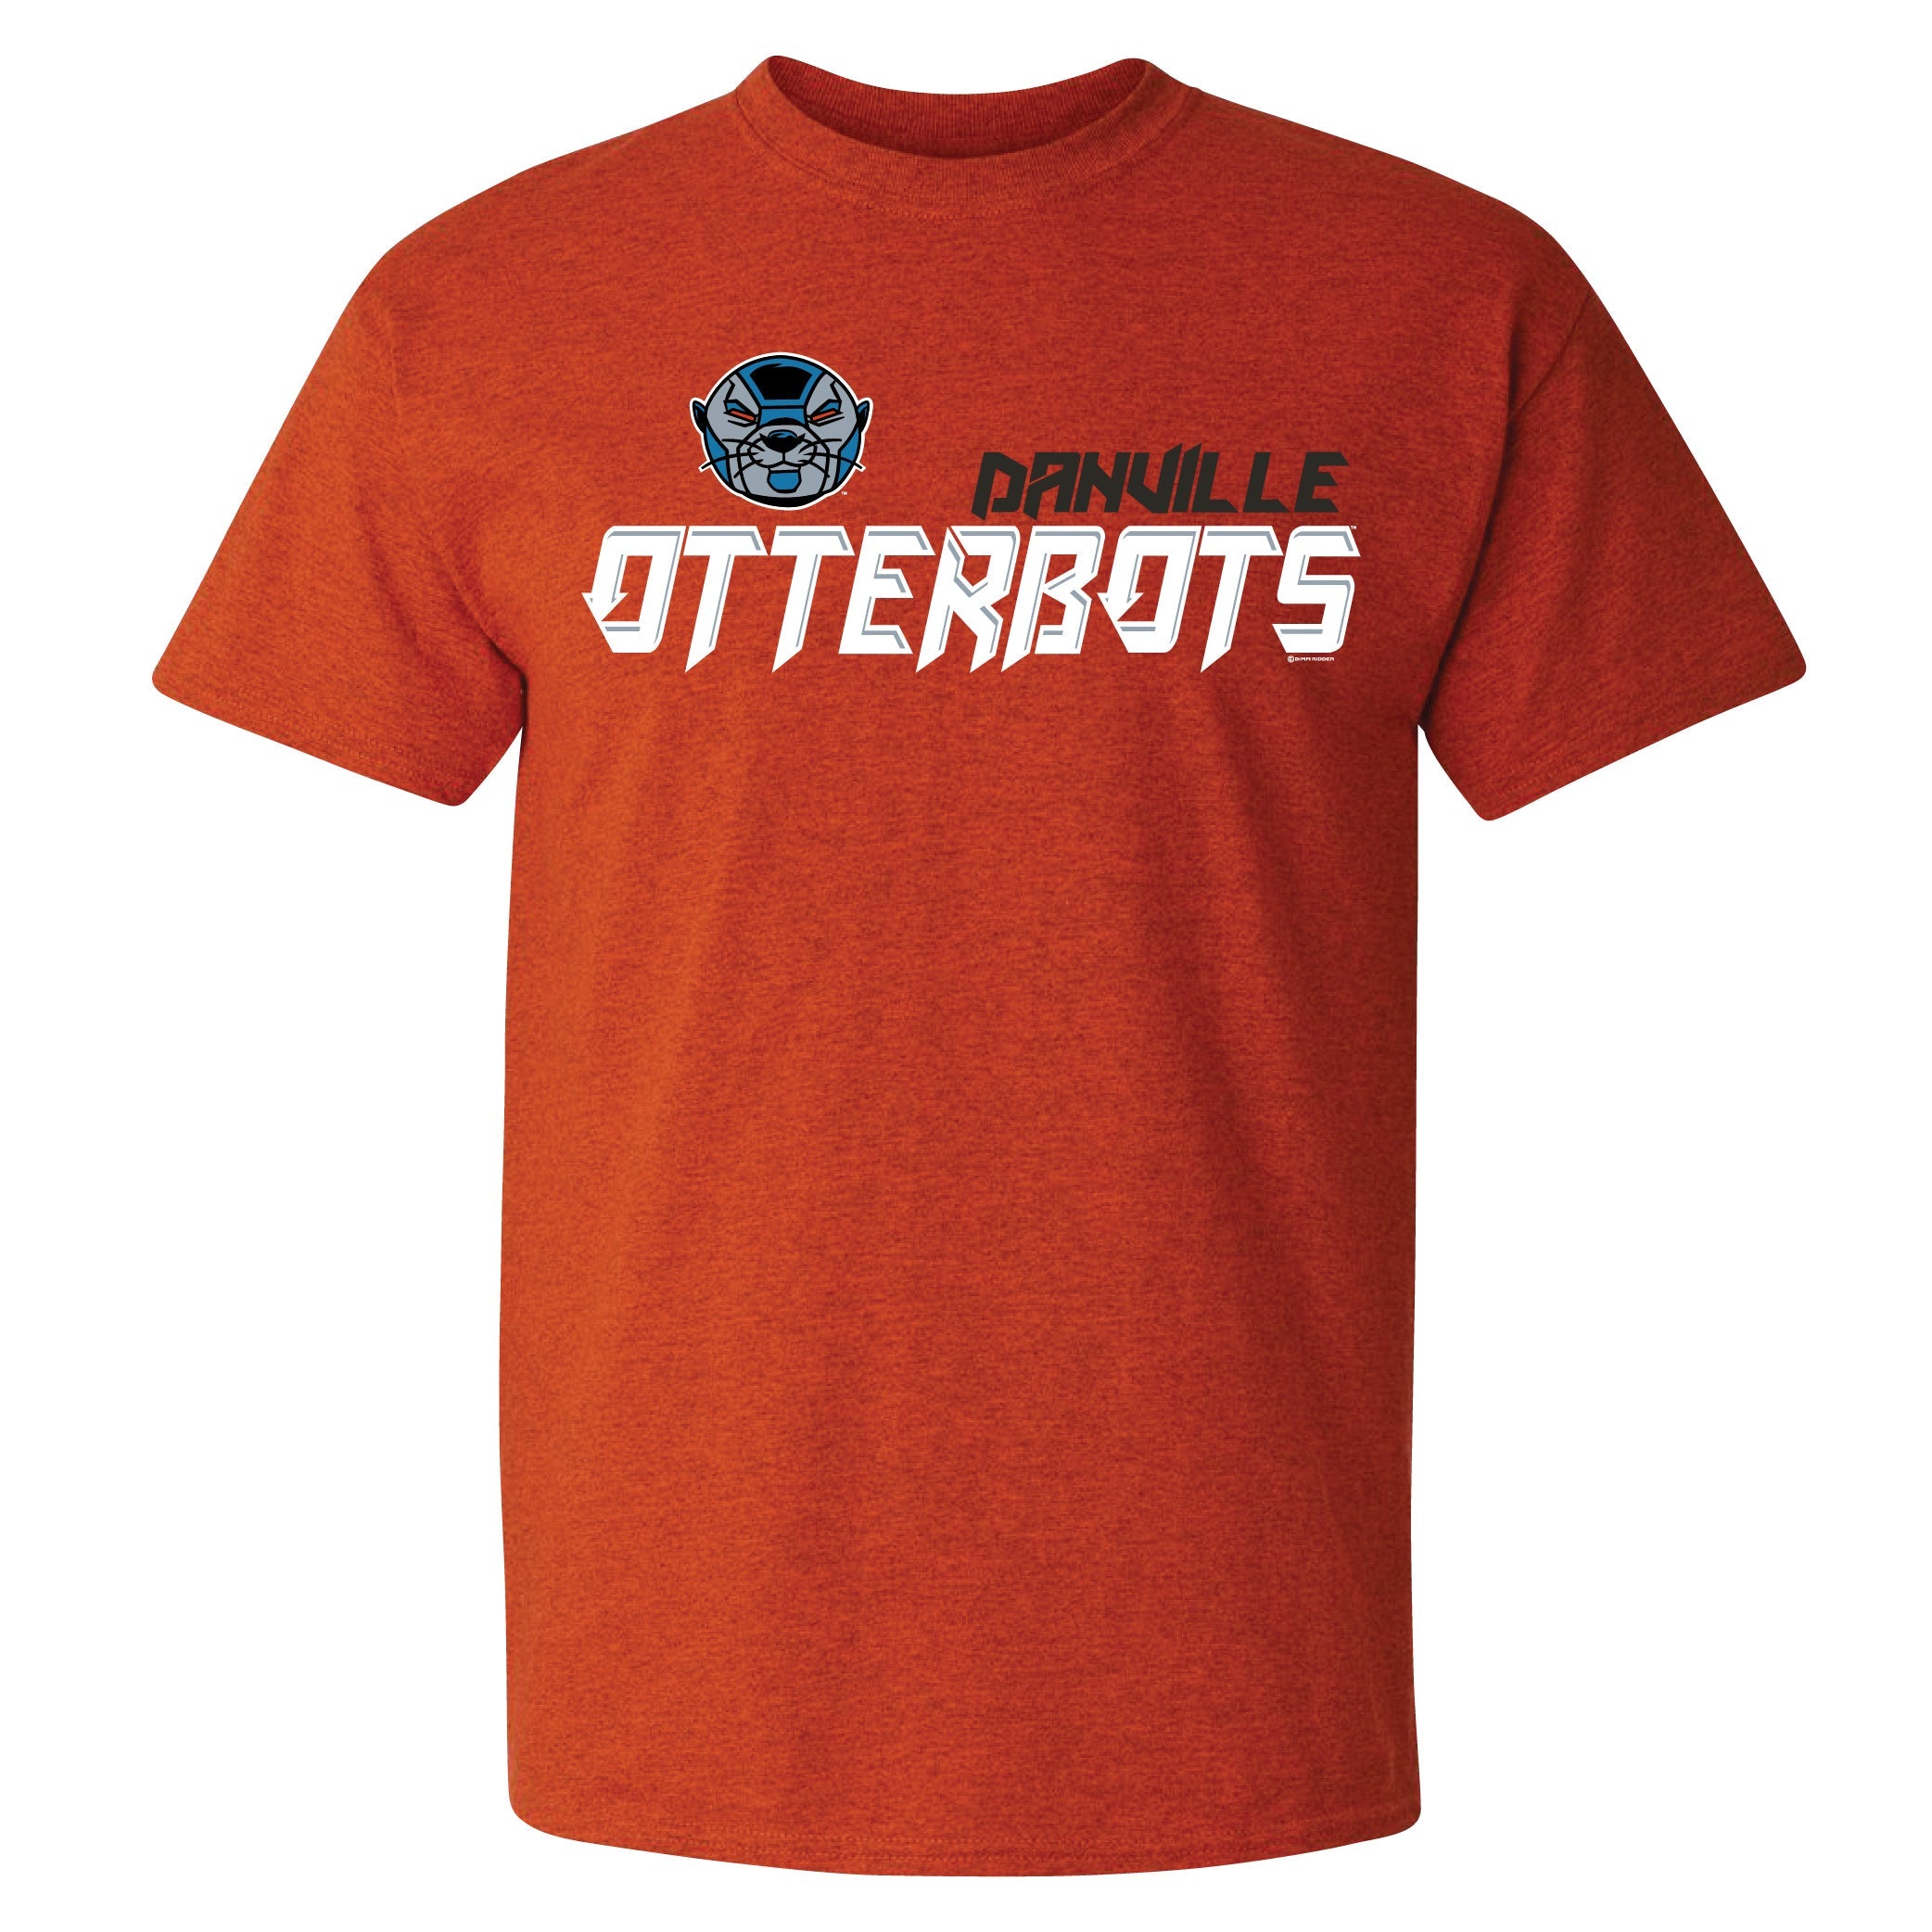 Otterbots Short Sleeve T - Futuristic Orange-0